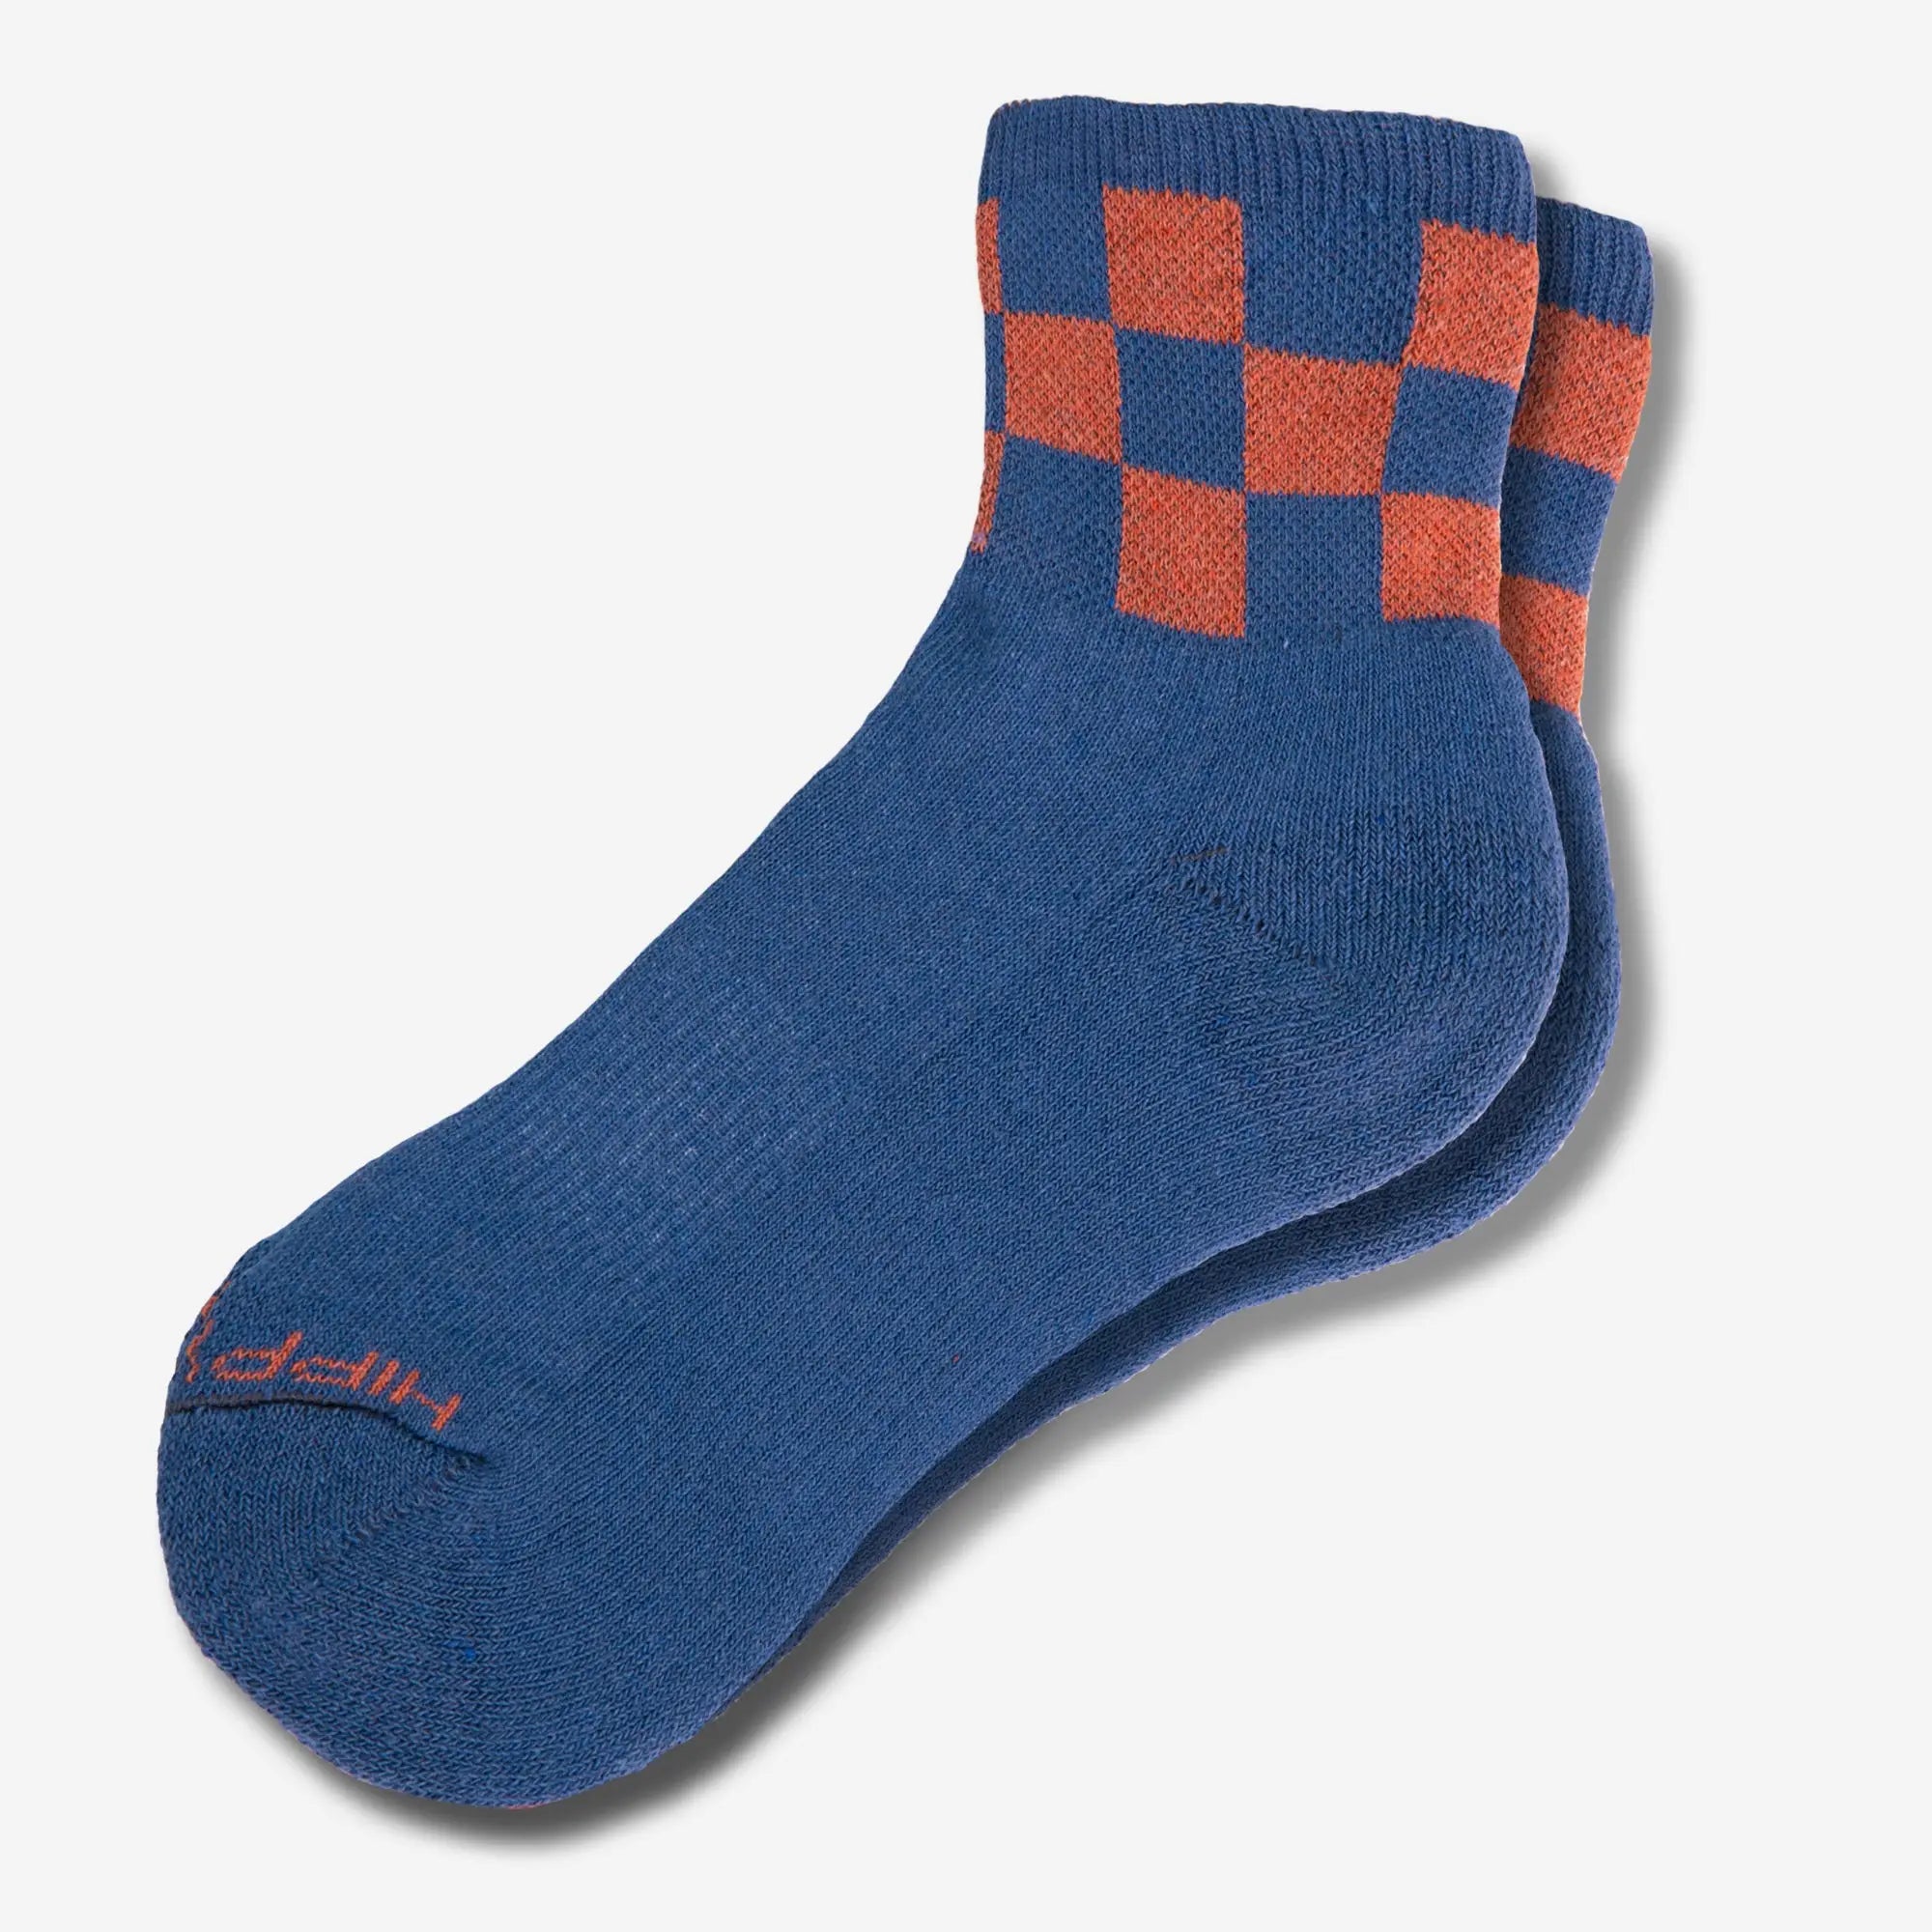 Checkered Quarter Crew Socks - Blueberry - Hippy Feet